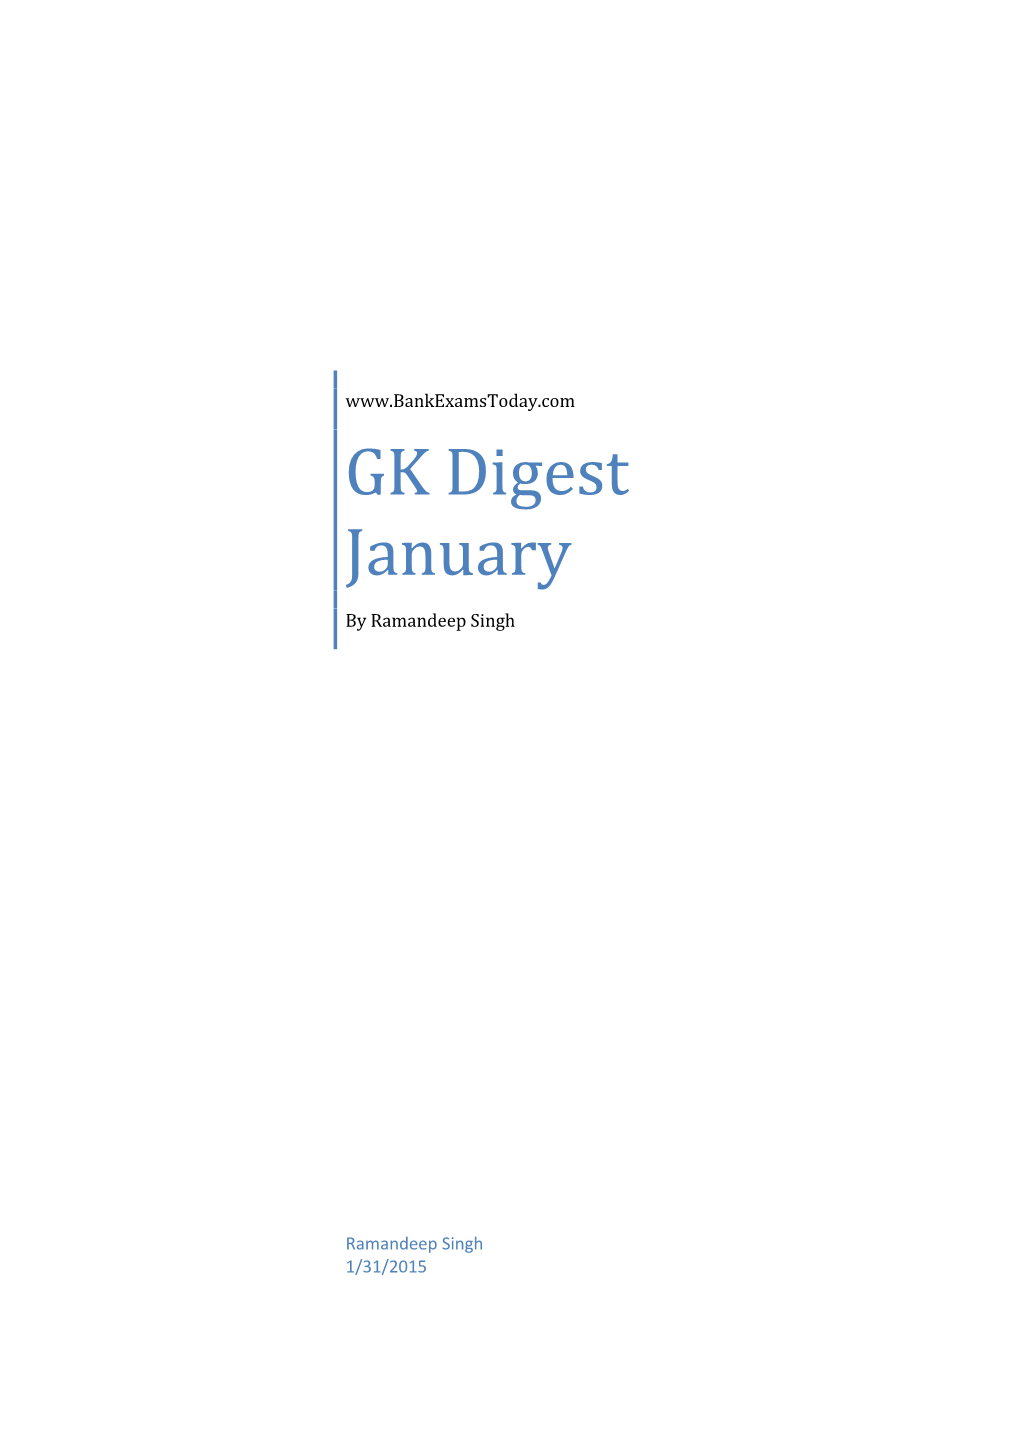 GK Digest January11 Jan